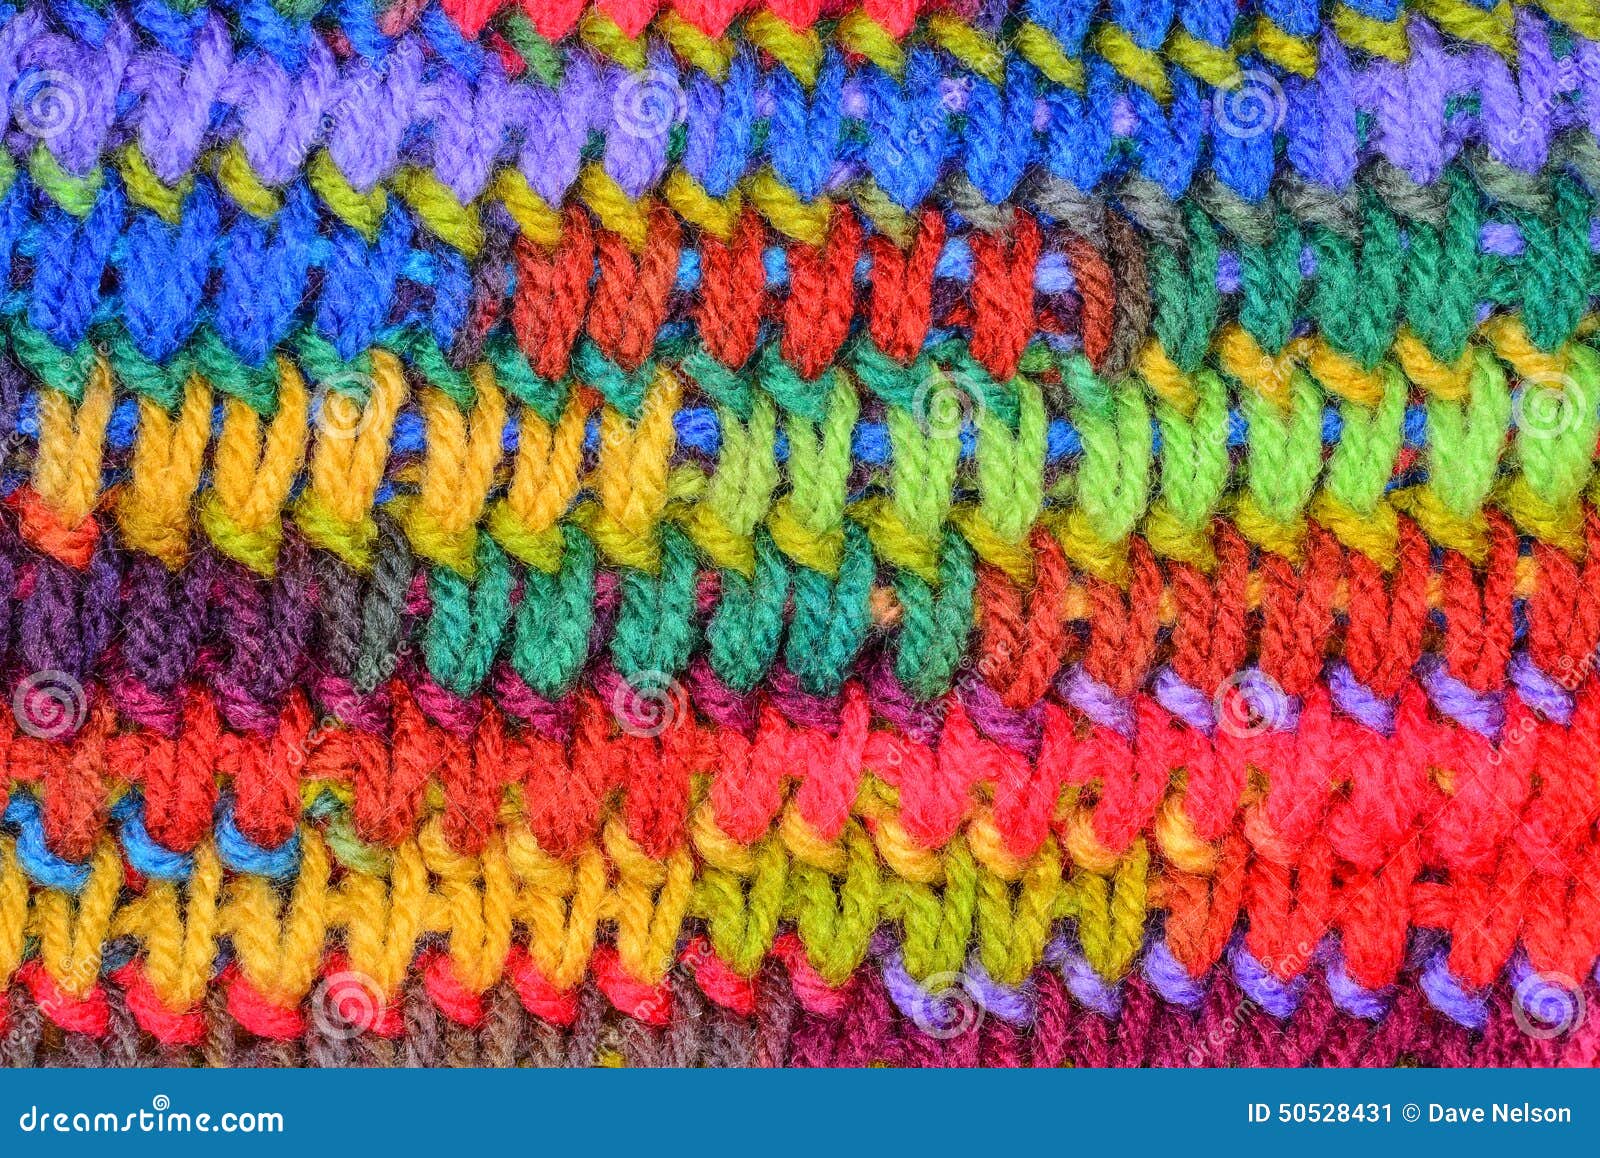 Muted Colorful Knitting Stitch Background Stock Image Image